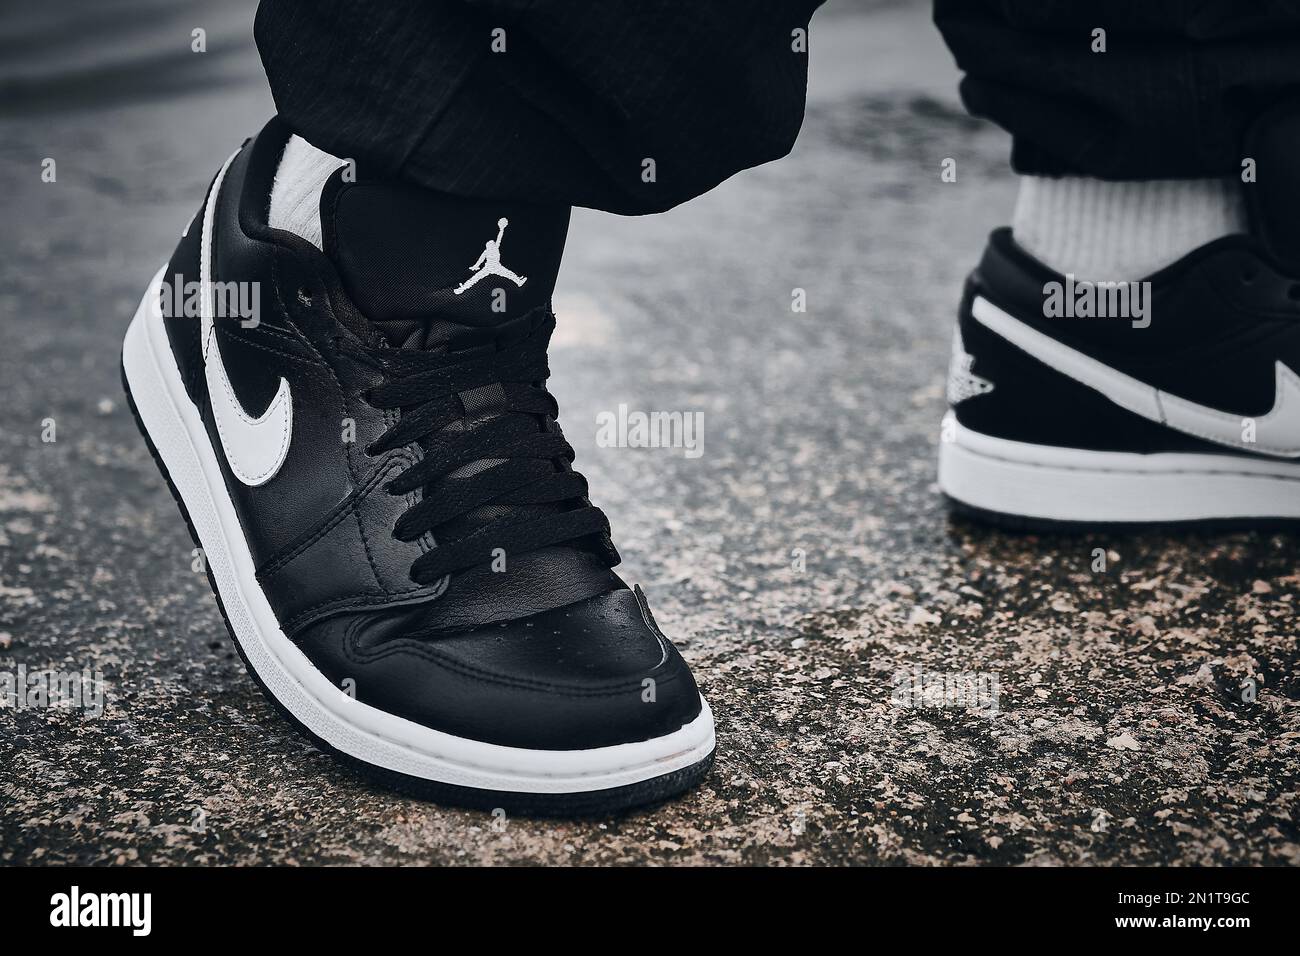 Nike Air Jordan Negro Blanco Fotografía de stock - Alamy